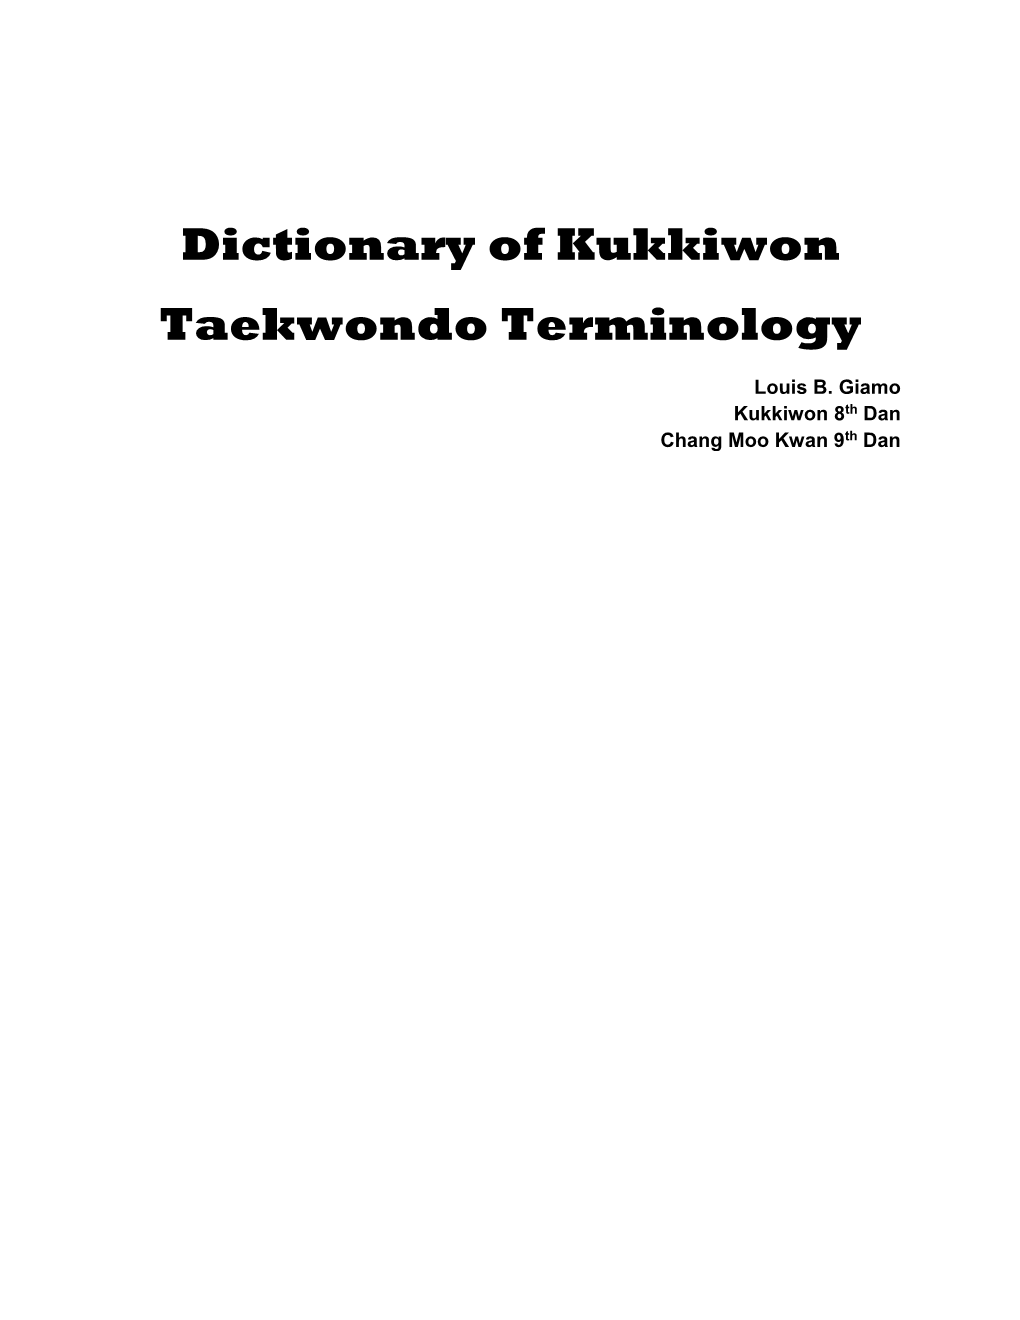 Dictionary of Kukkiwon Taekwondo Terminology